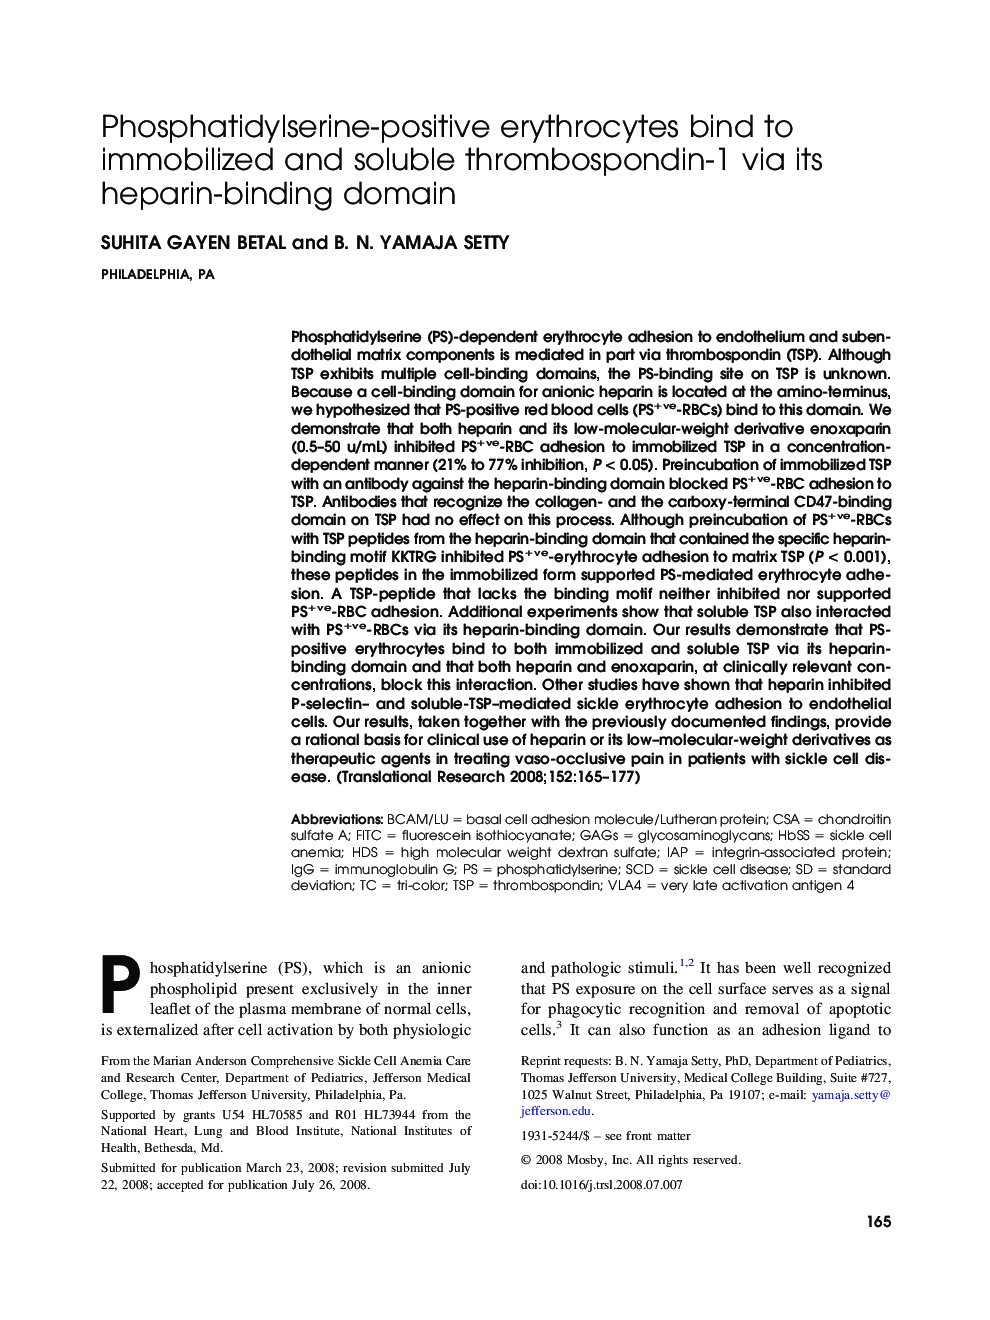 Phosphatidylserine-positive erythrocytes bind to immobilized and soluble thrombospondin-1 via its heparin-binding domain 